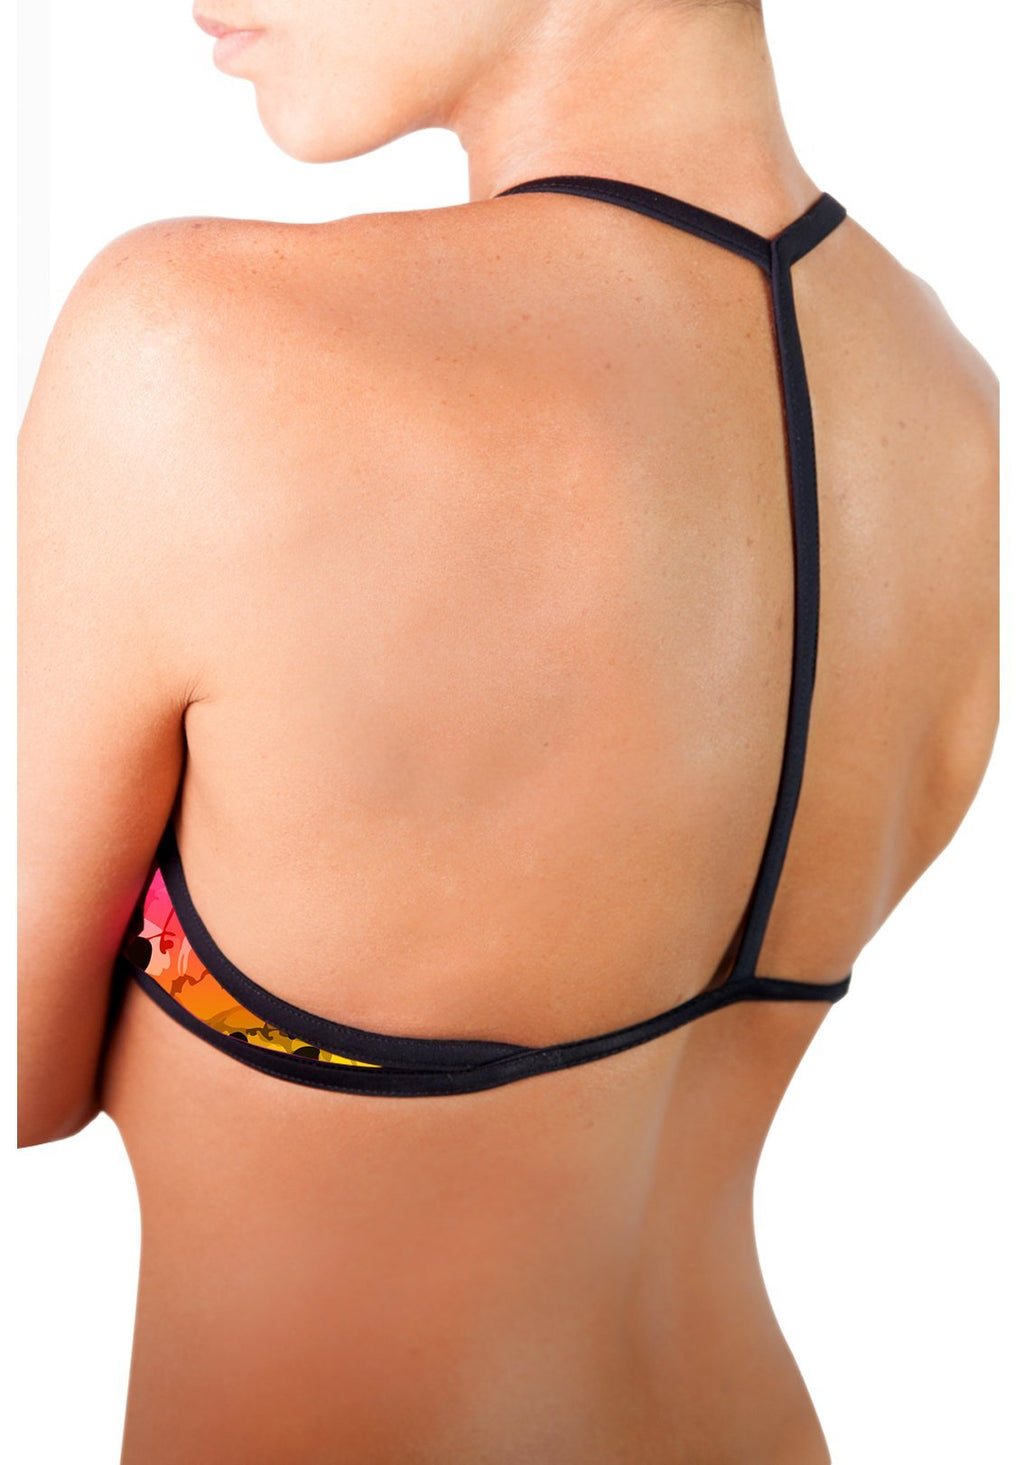 Top deportivo reversible Bikini Sunrise - wiinkbcn